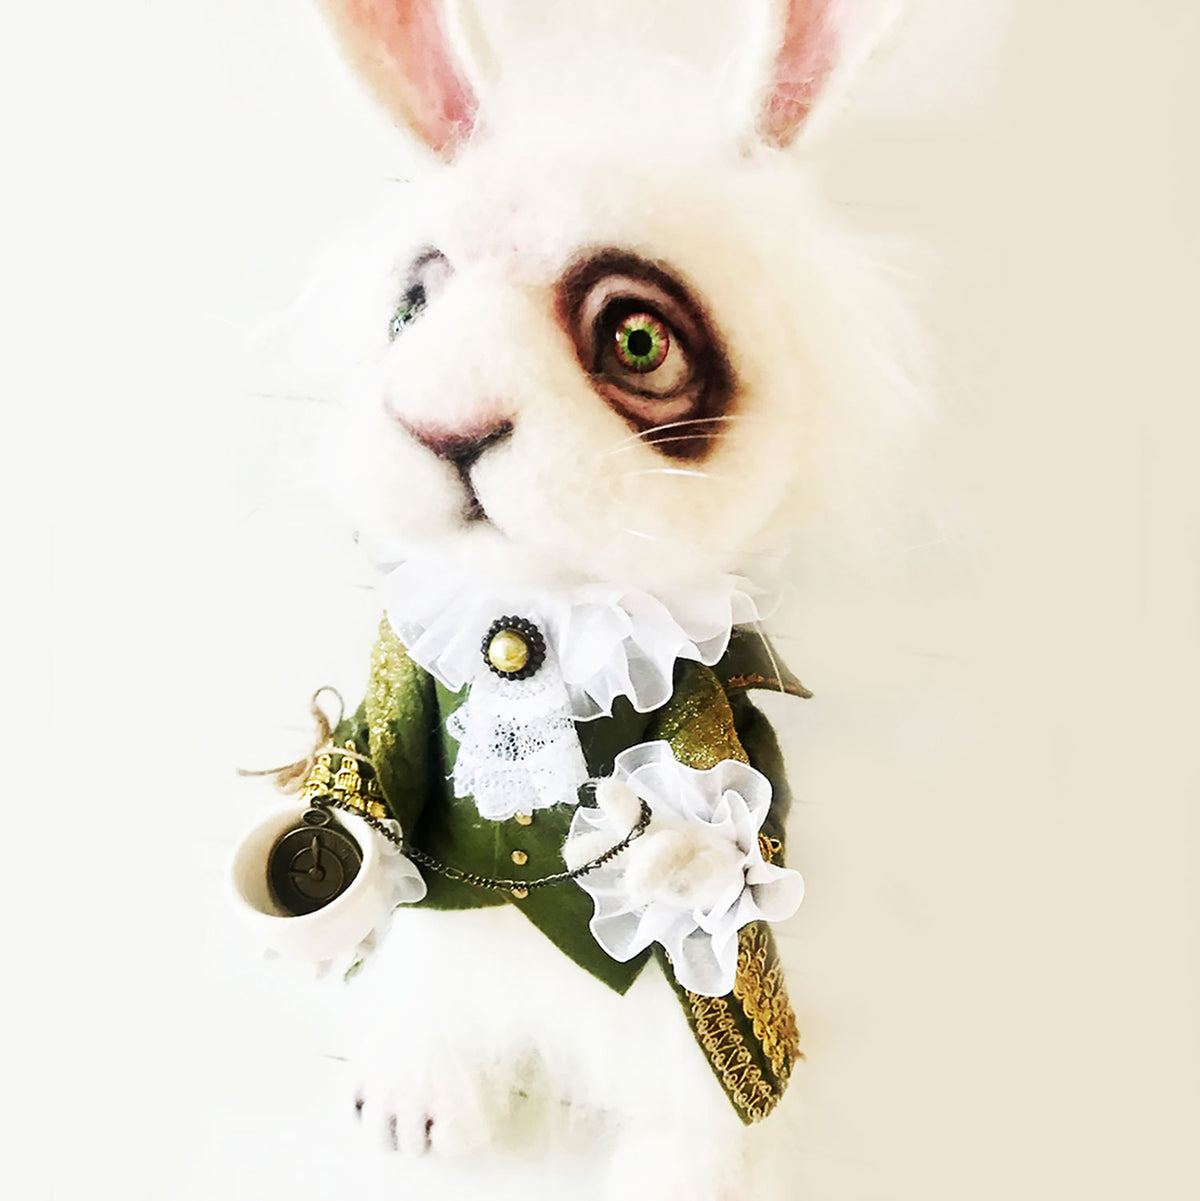 Felt Animal Statue - The White Rabbit